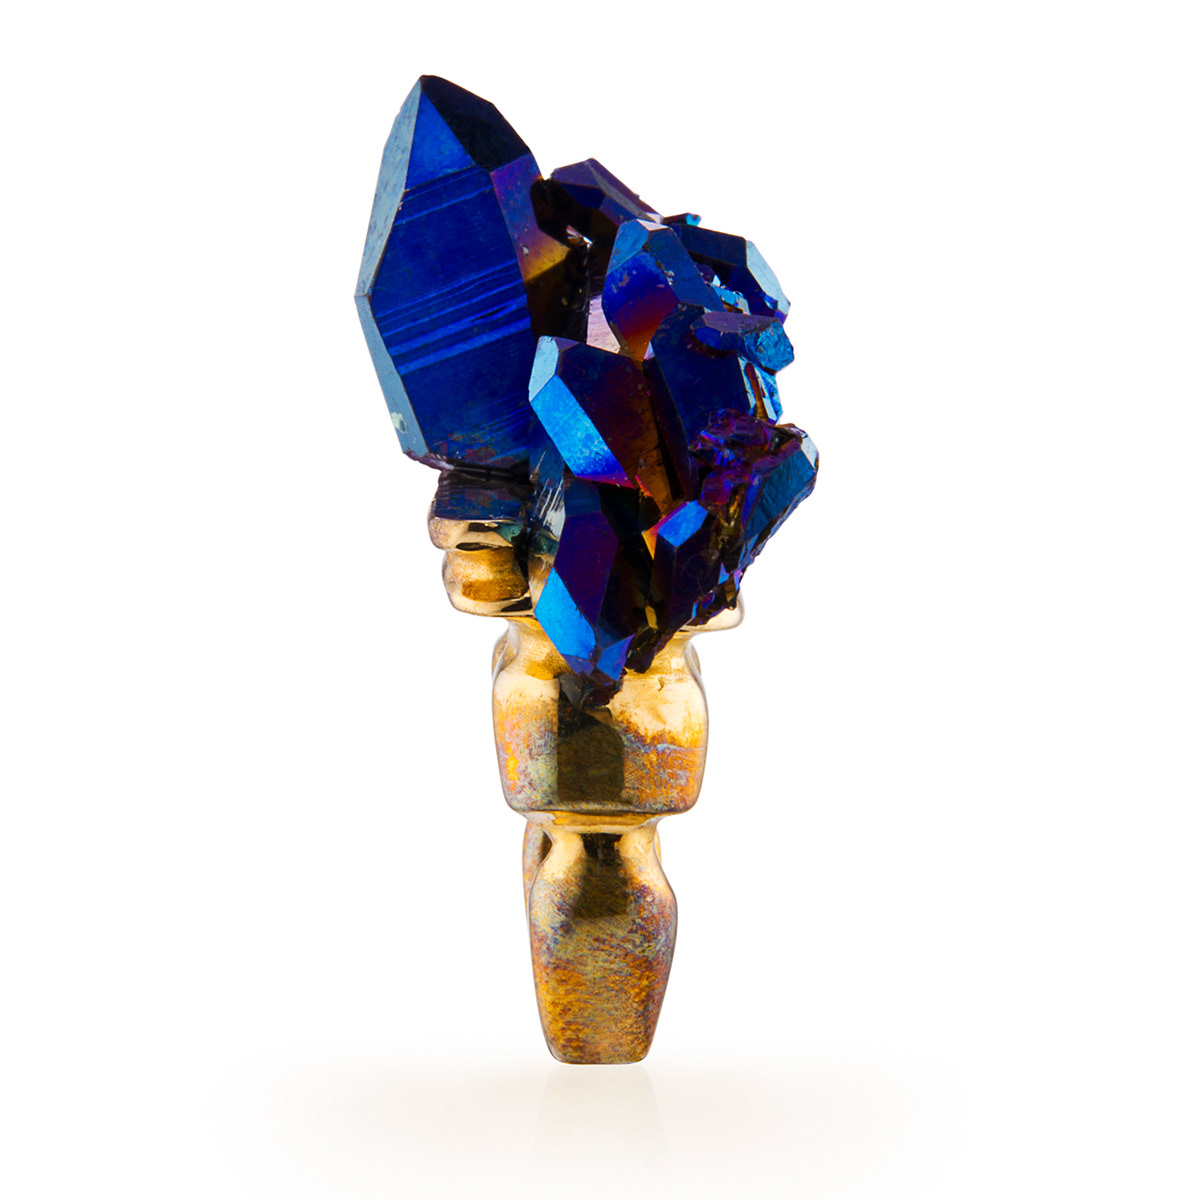 Andy Lifschutz jewelry sculpture design Ecommerce fab